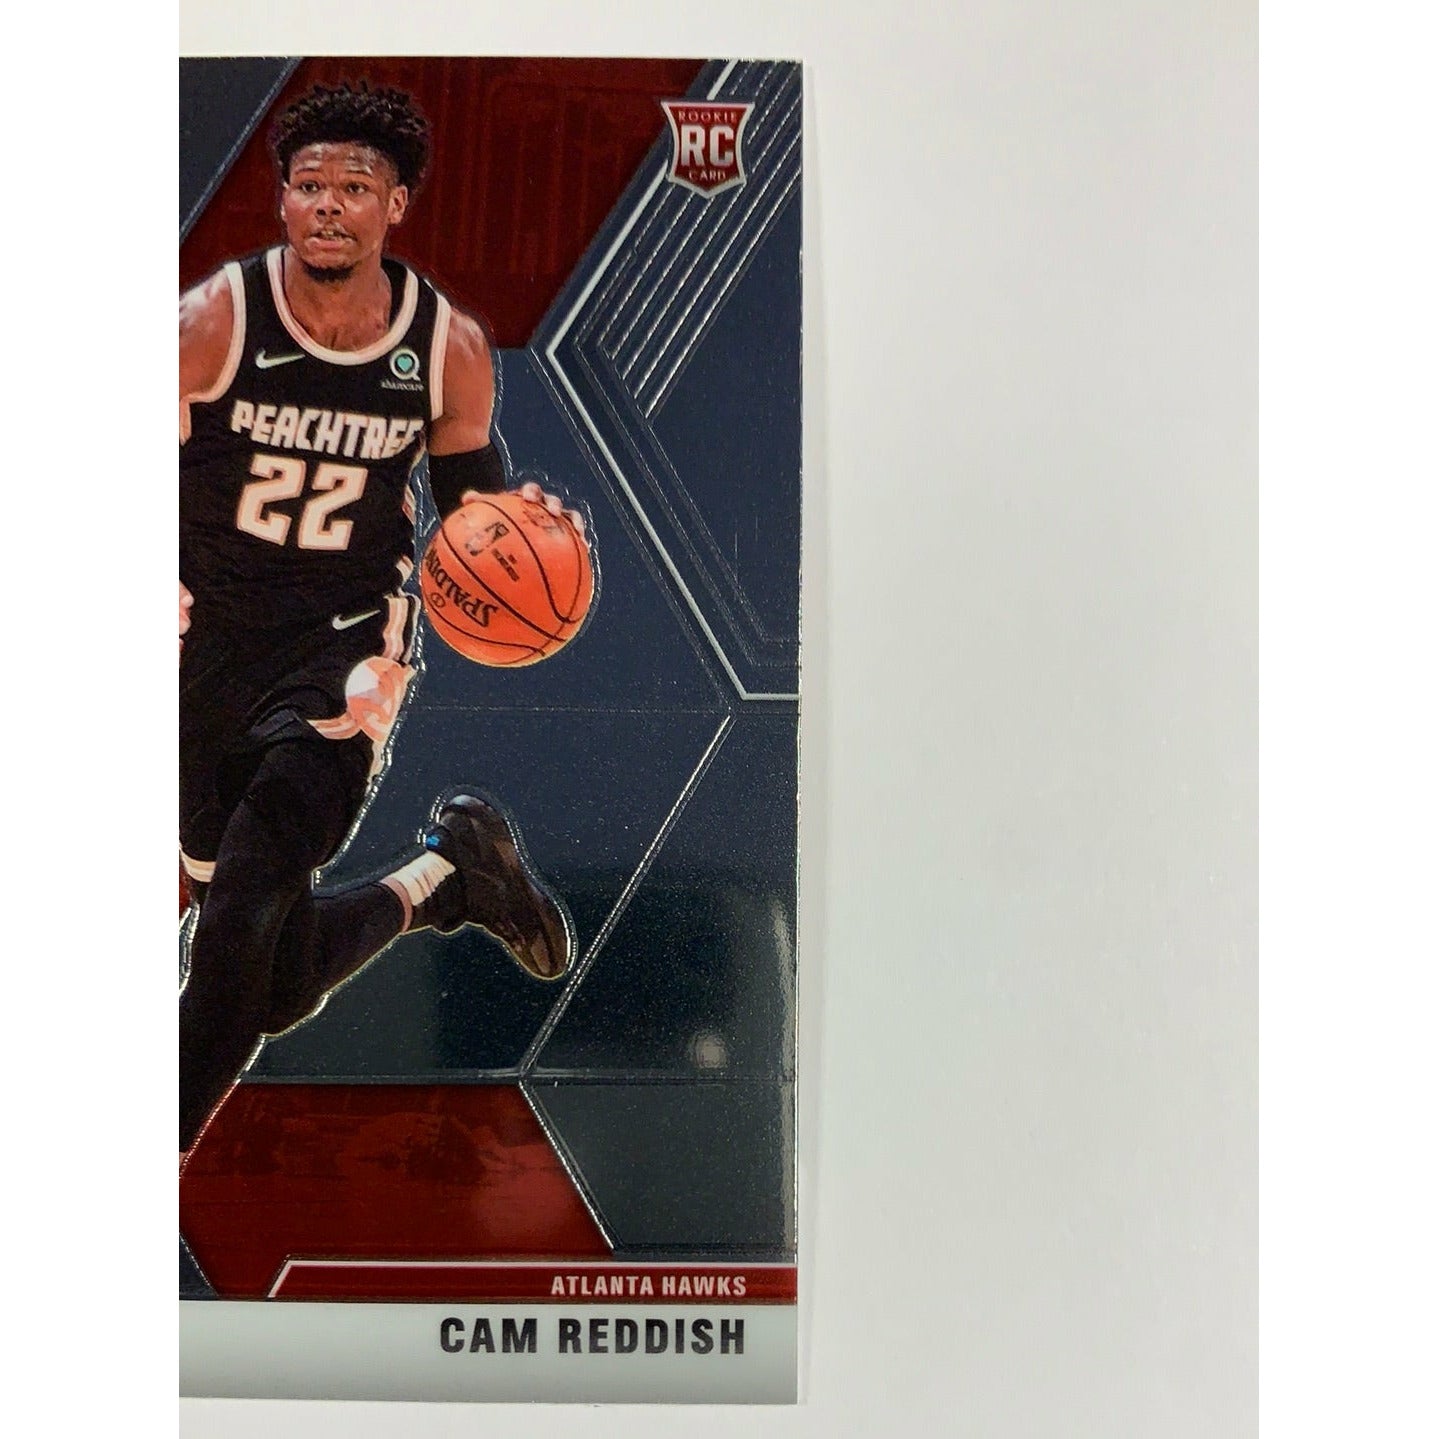 2019-20 Mosaic Cam Reddish Rookie Card